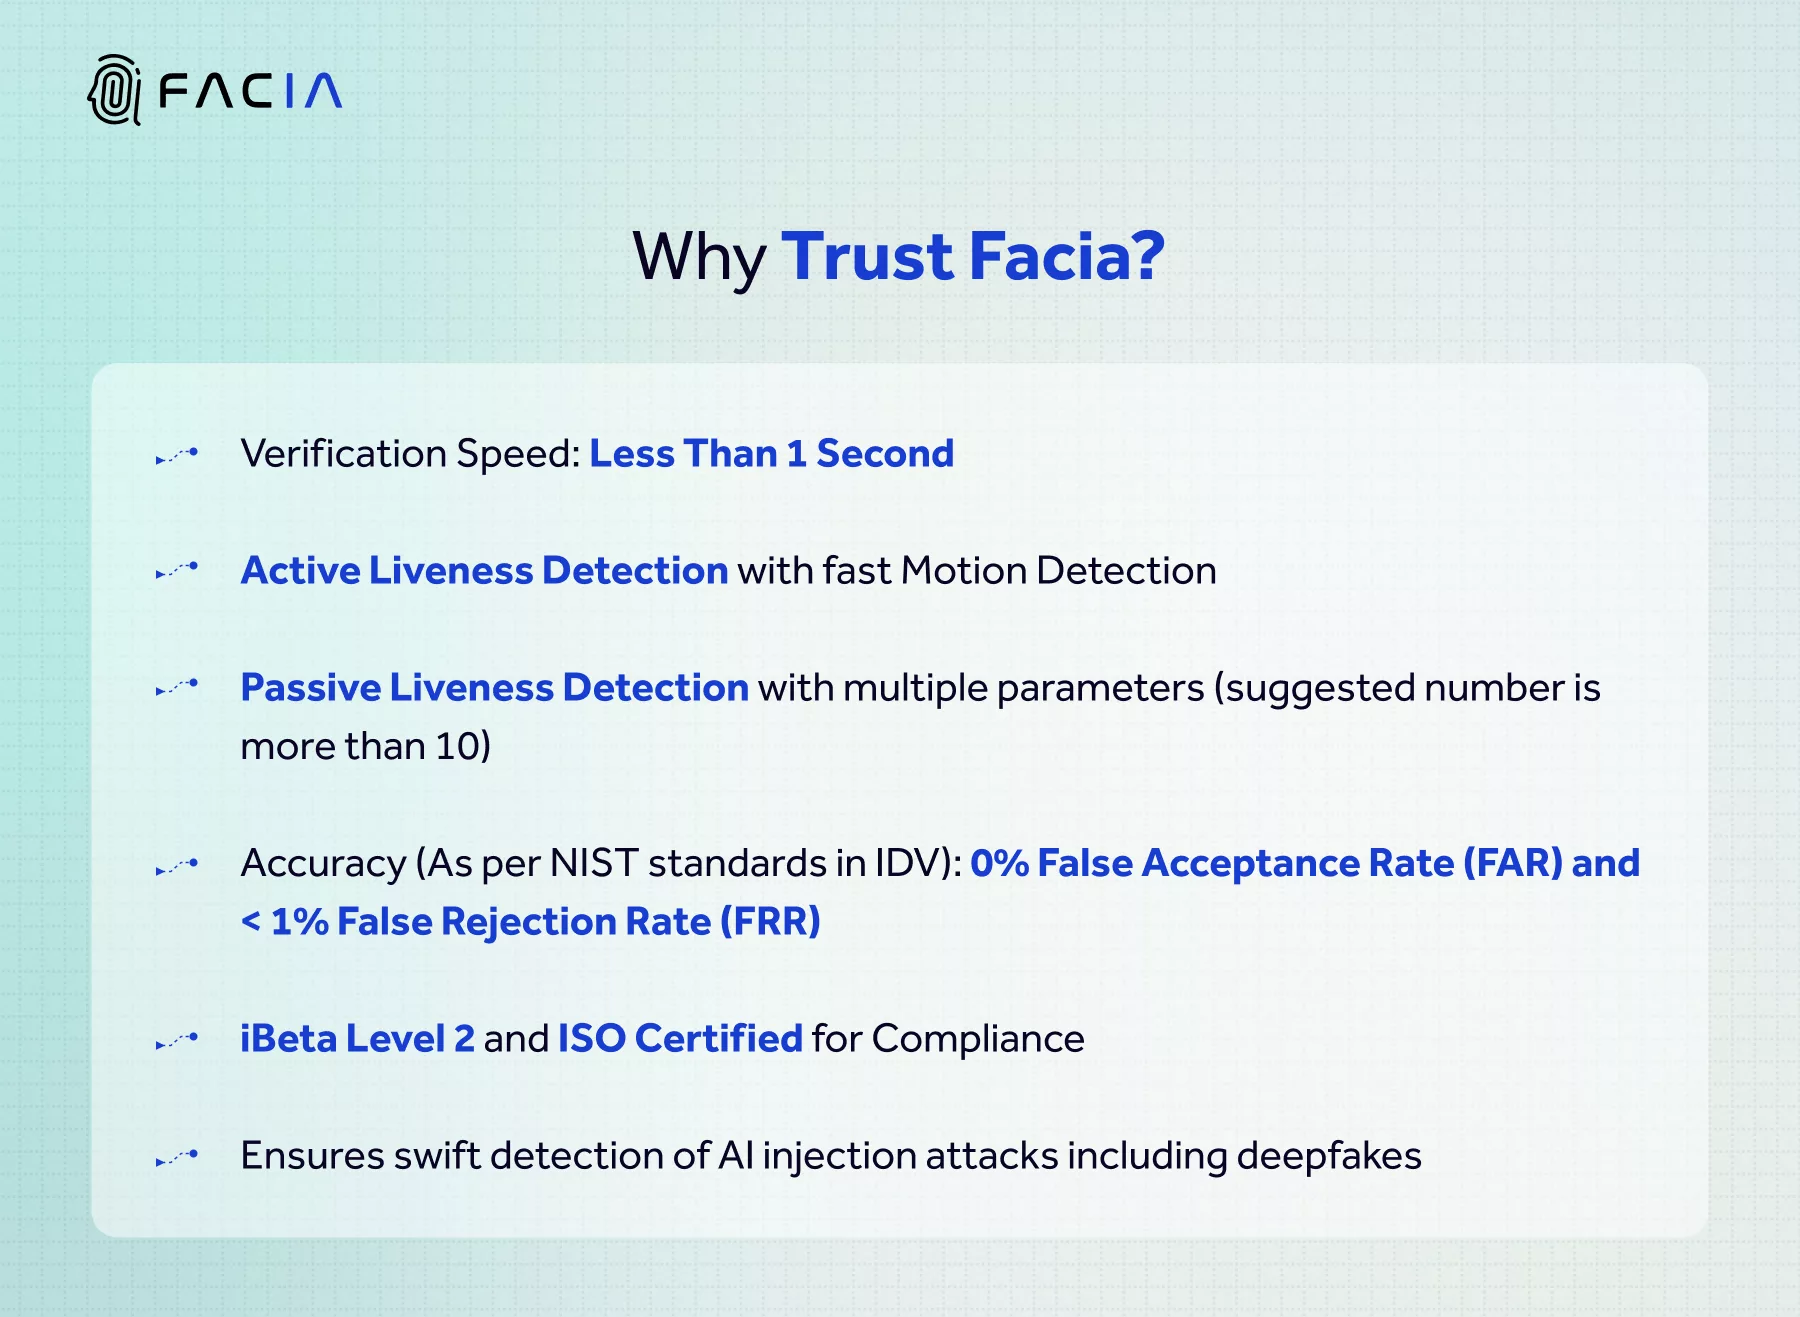 Features of Facia, an ideal facial identification solution.